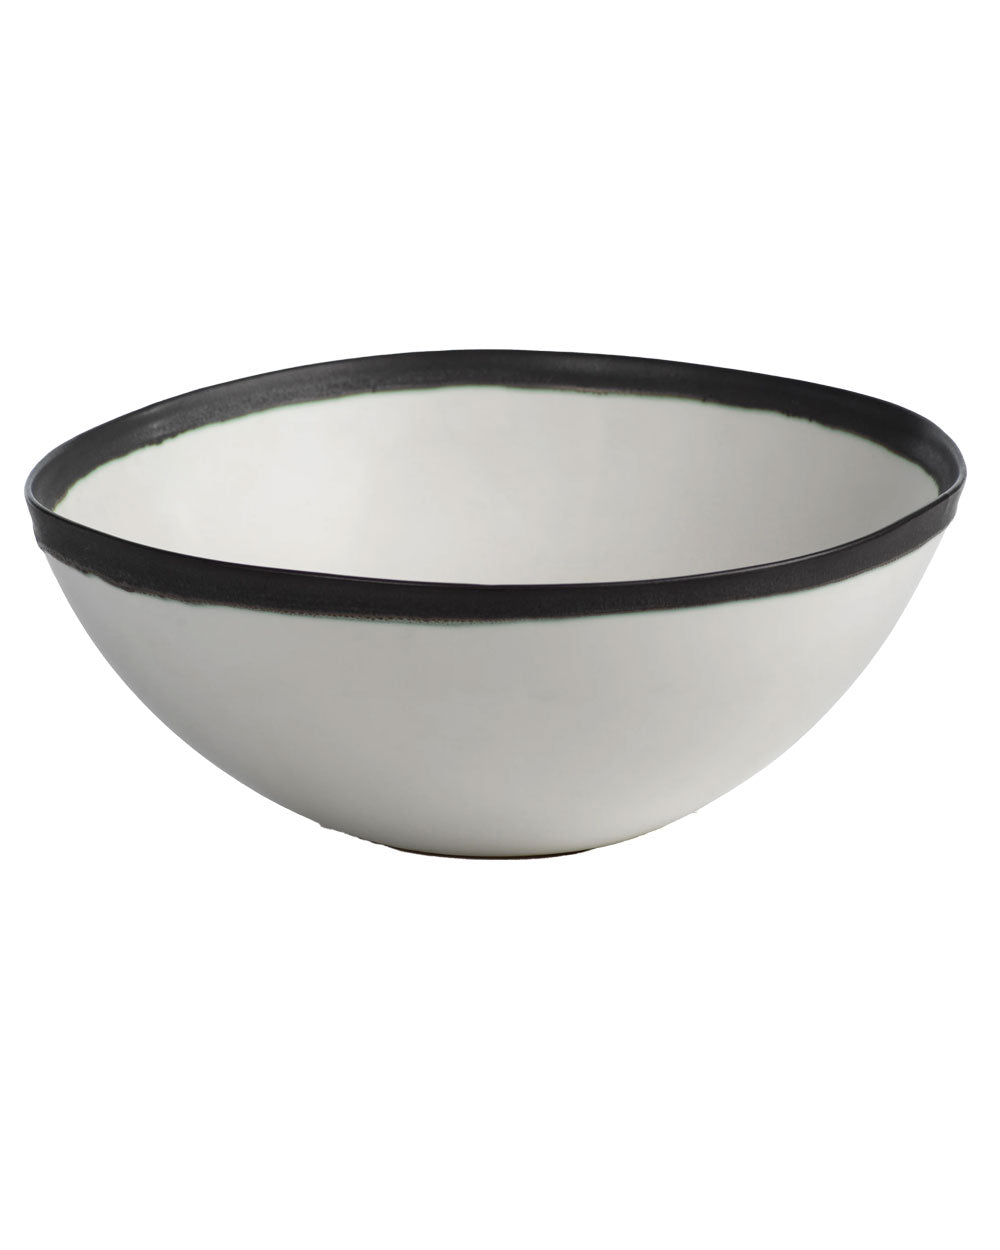 Trento White Ceramic Bowl with Black Volcanic Rim